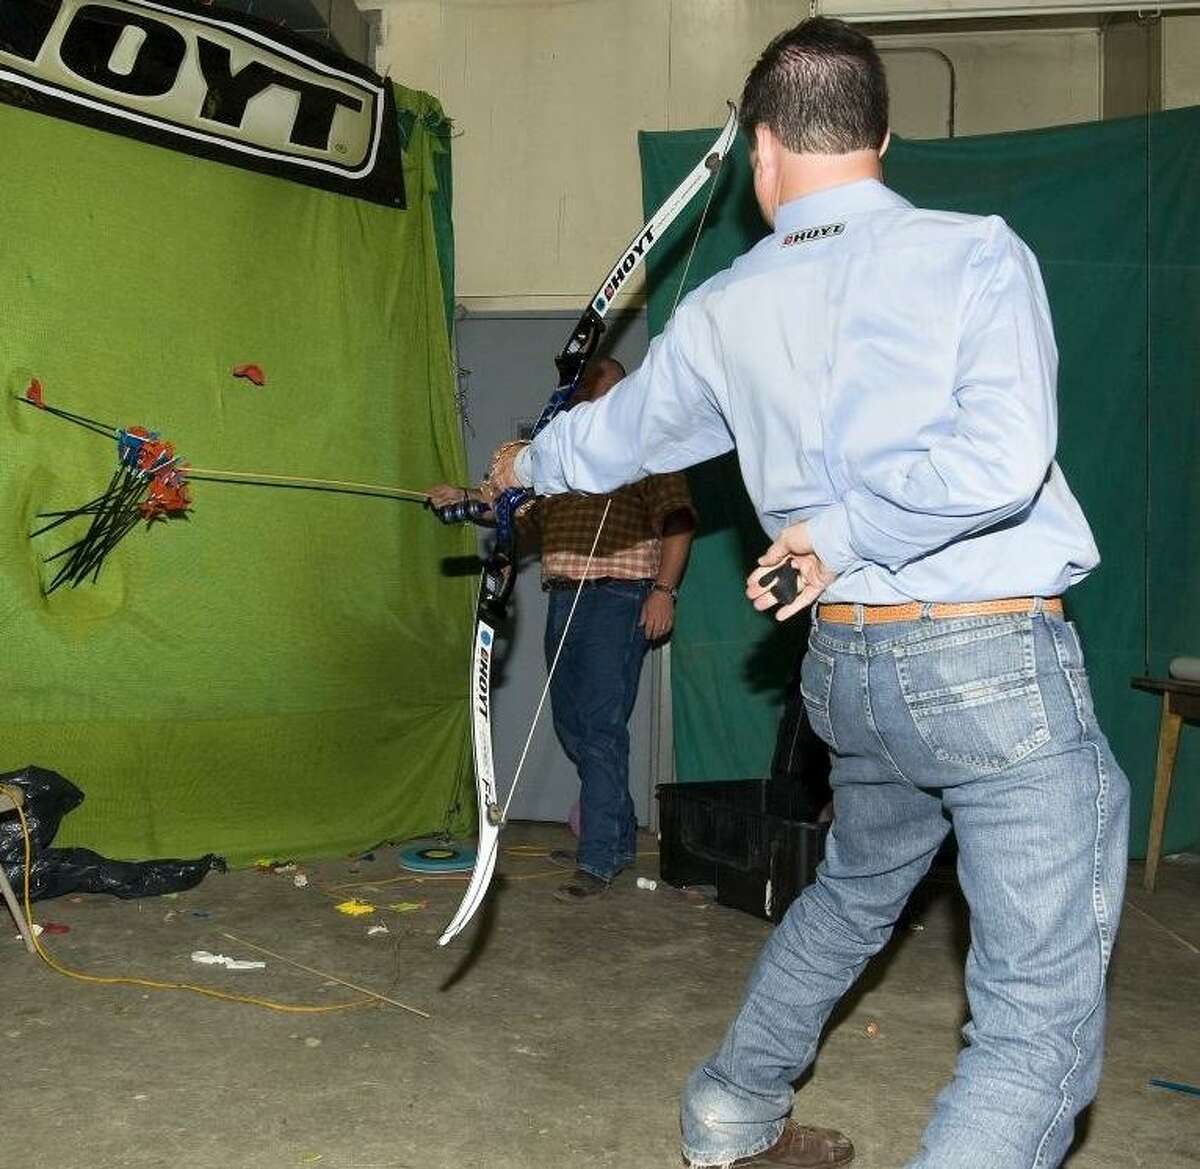 Professional exhibition archery shooter Frank Addington Jr. fires 12 arrows at once.